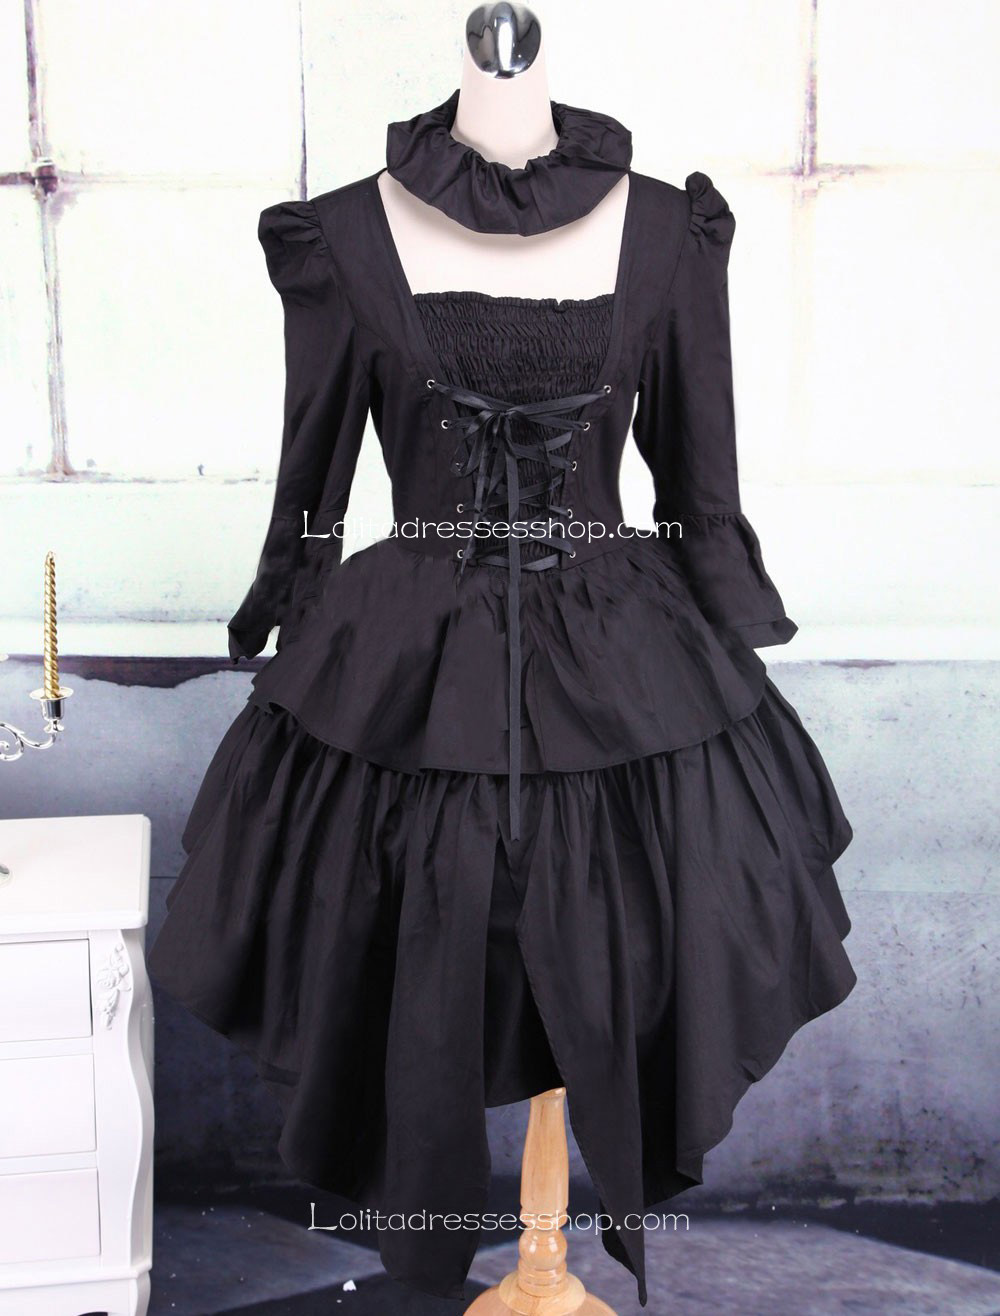 Black Cotton Square Neck Ruffles Punk Lolita Dress